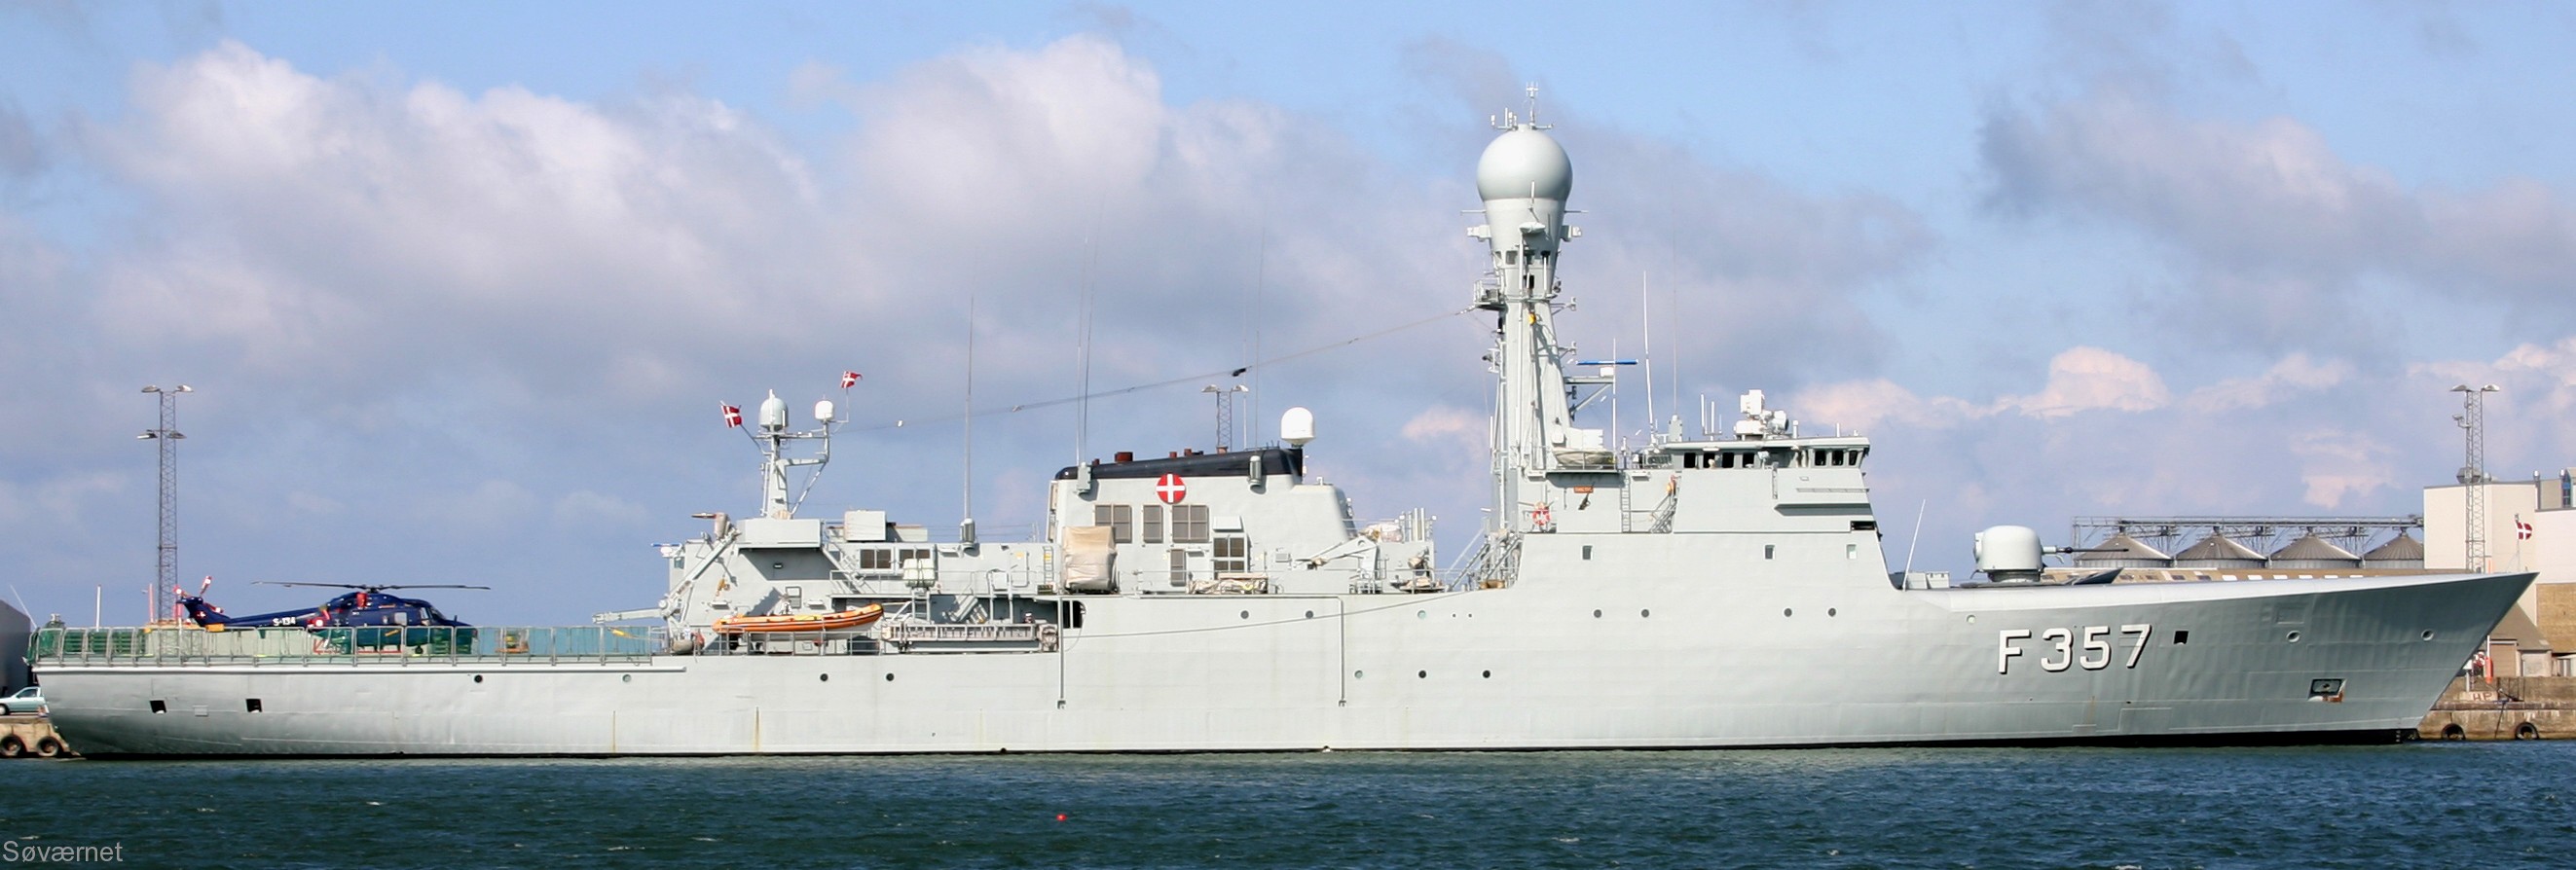 f-357 hdms thetis ocean patrol frigate royal danish navy kongelige danske marine inspektionsskibet 26